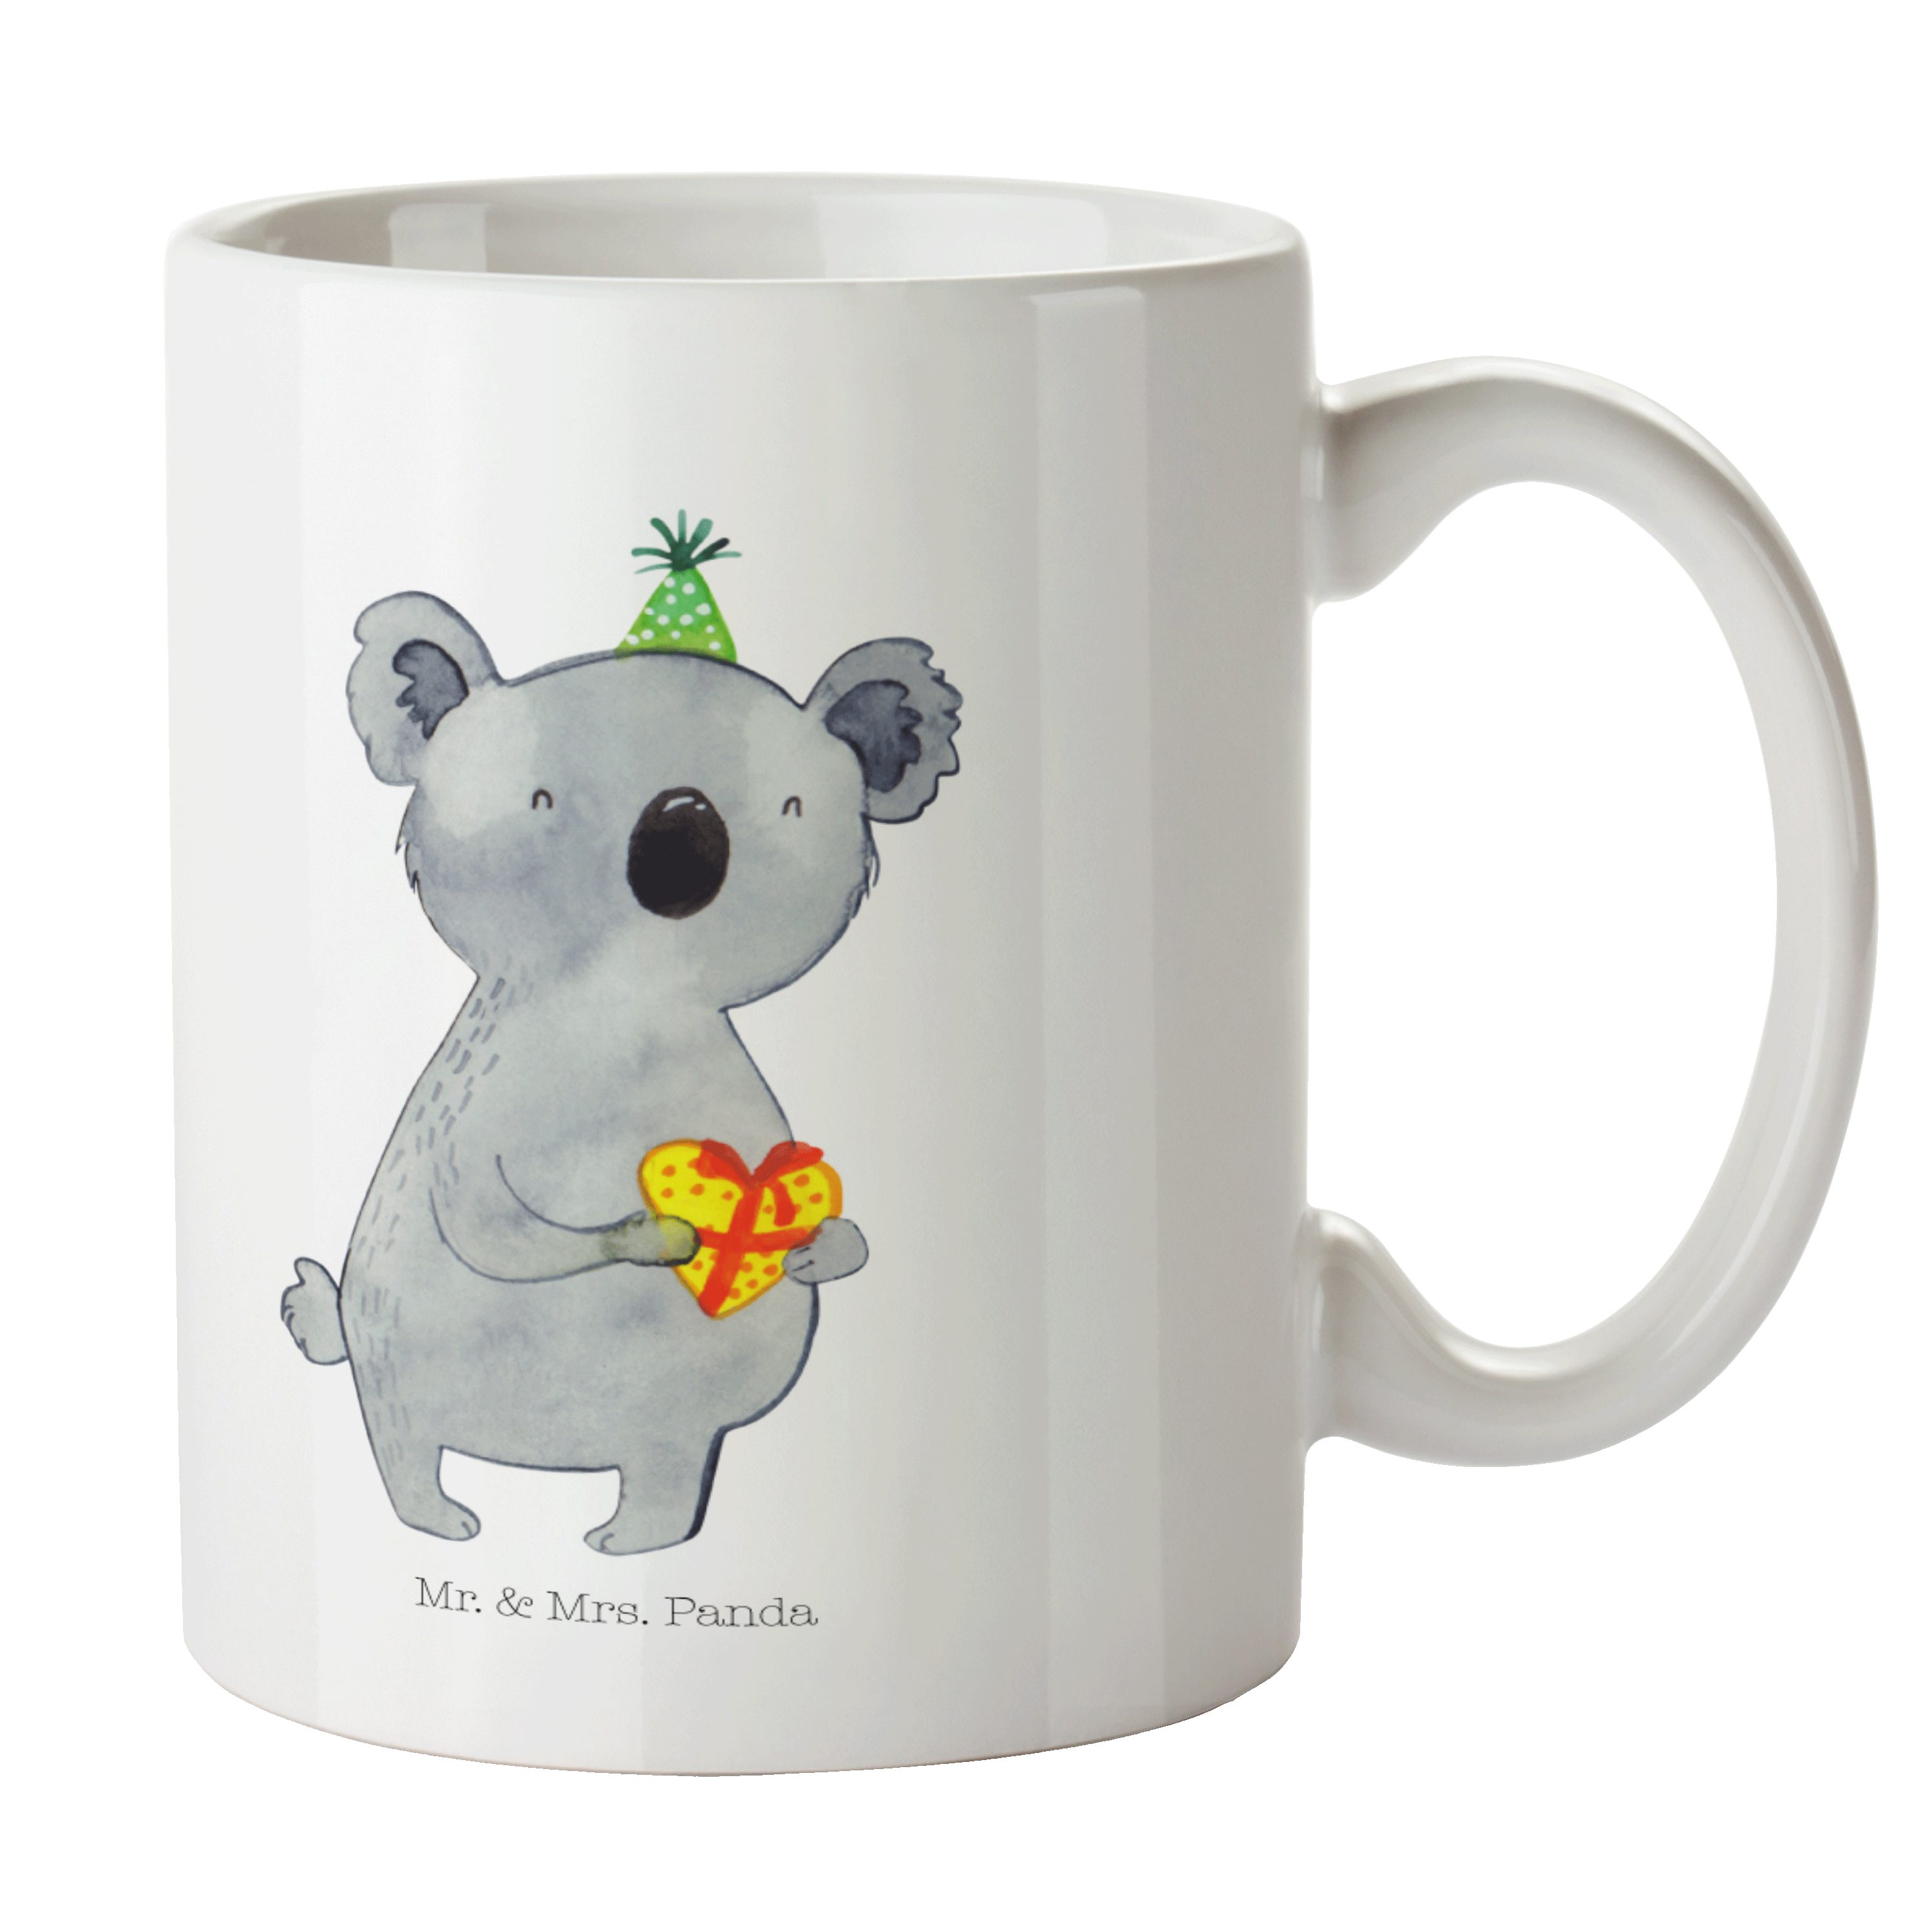 Mr. & Party, Koala Tasse - Keramik Geschenk Mrs. Koalabär, Panda - Tasse Weiß Sprüche, Kaffeetasse